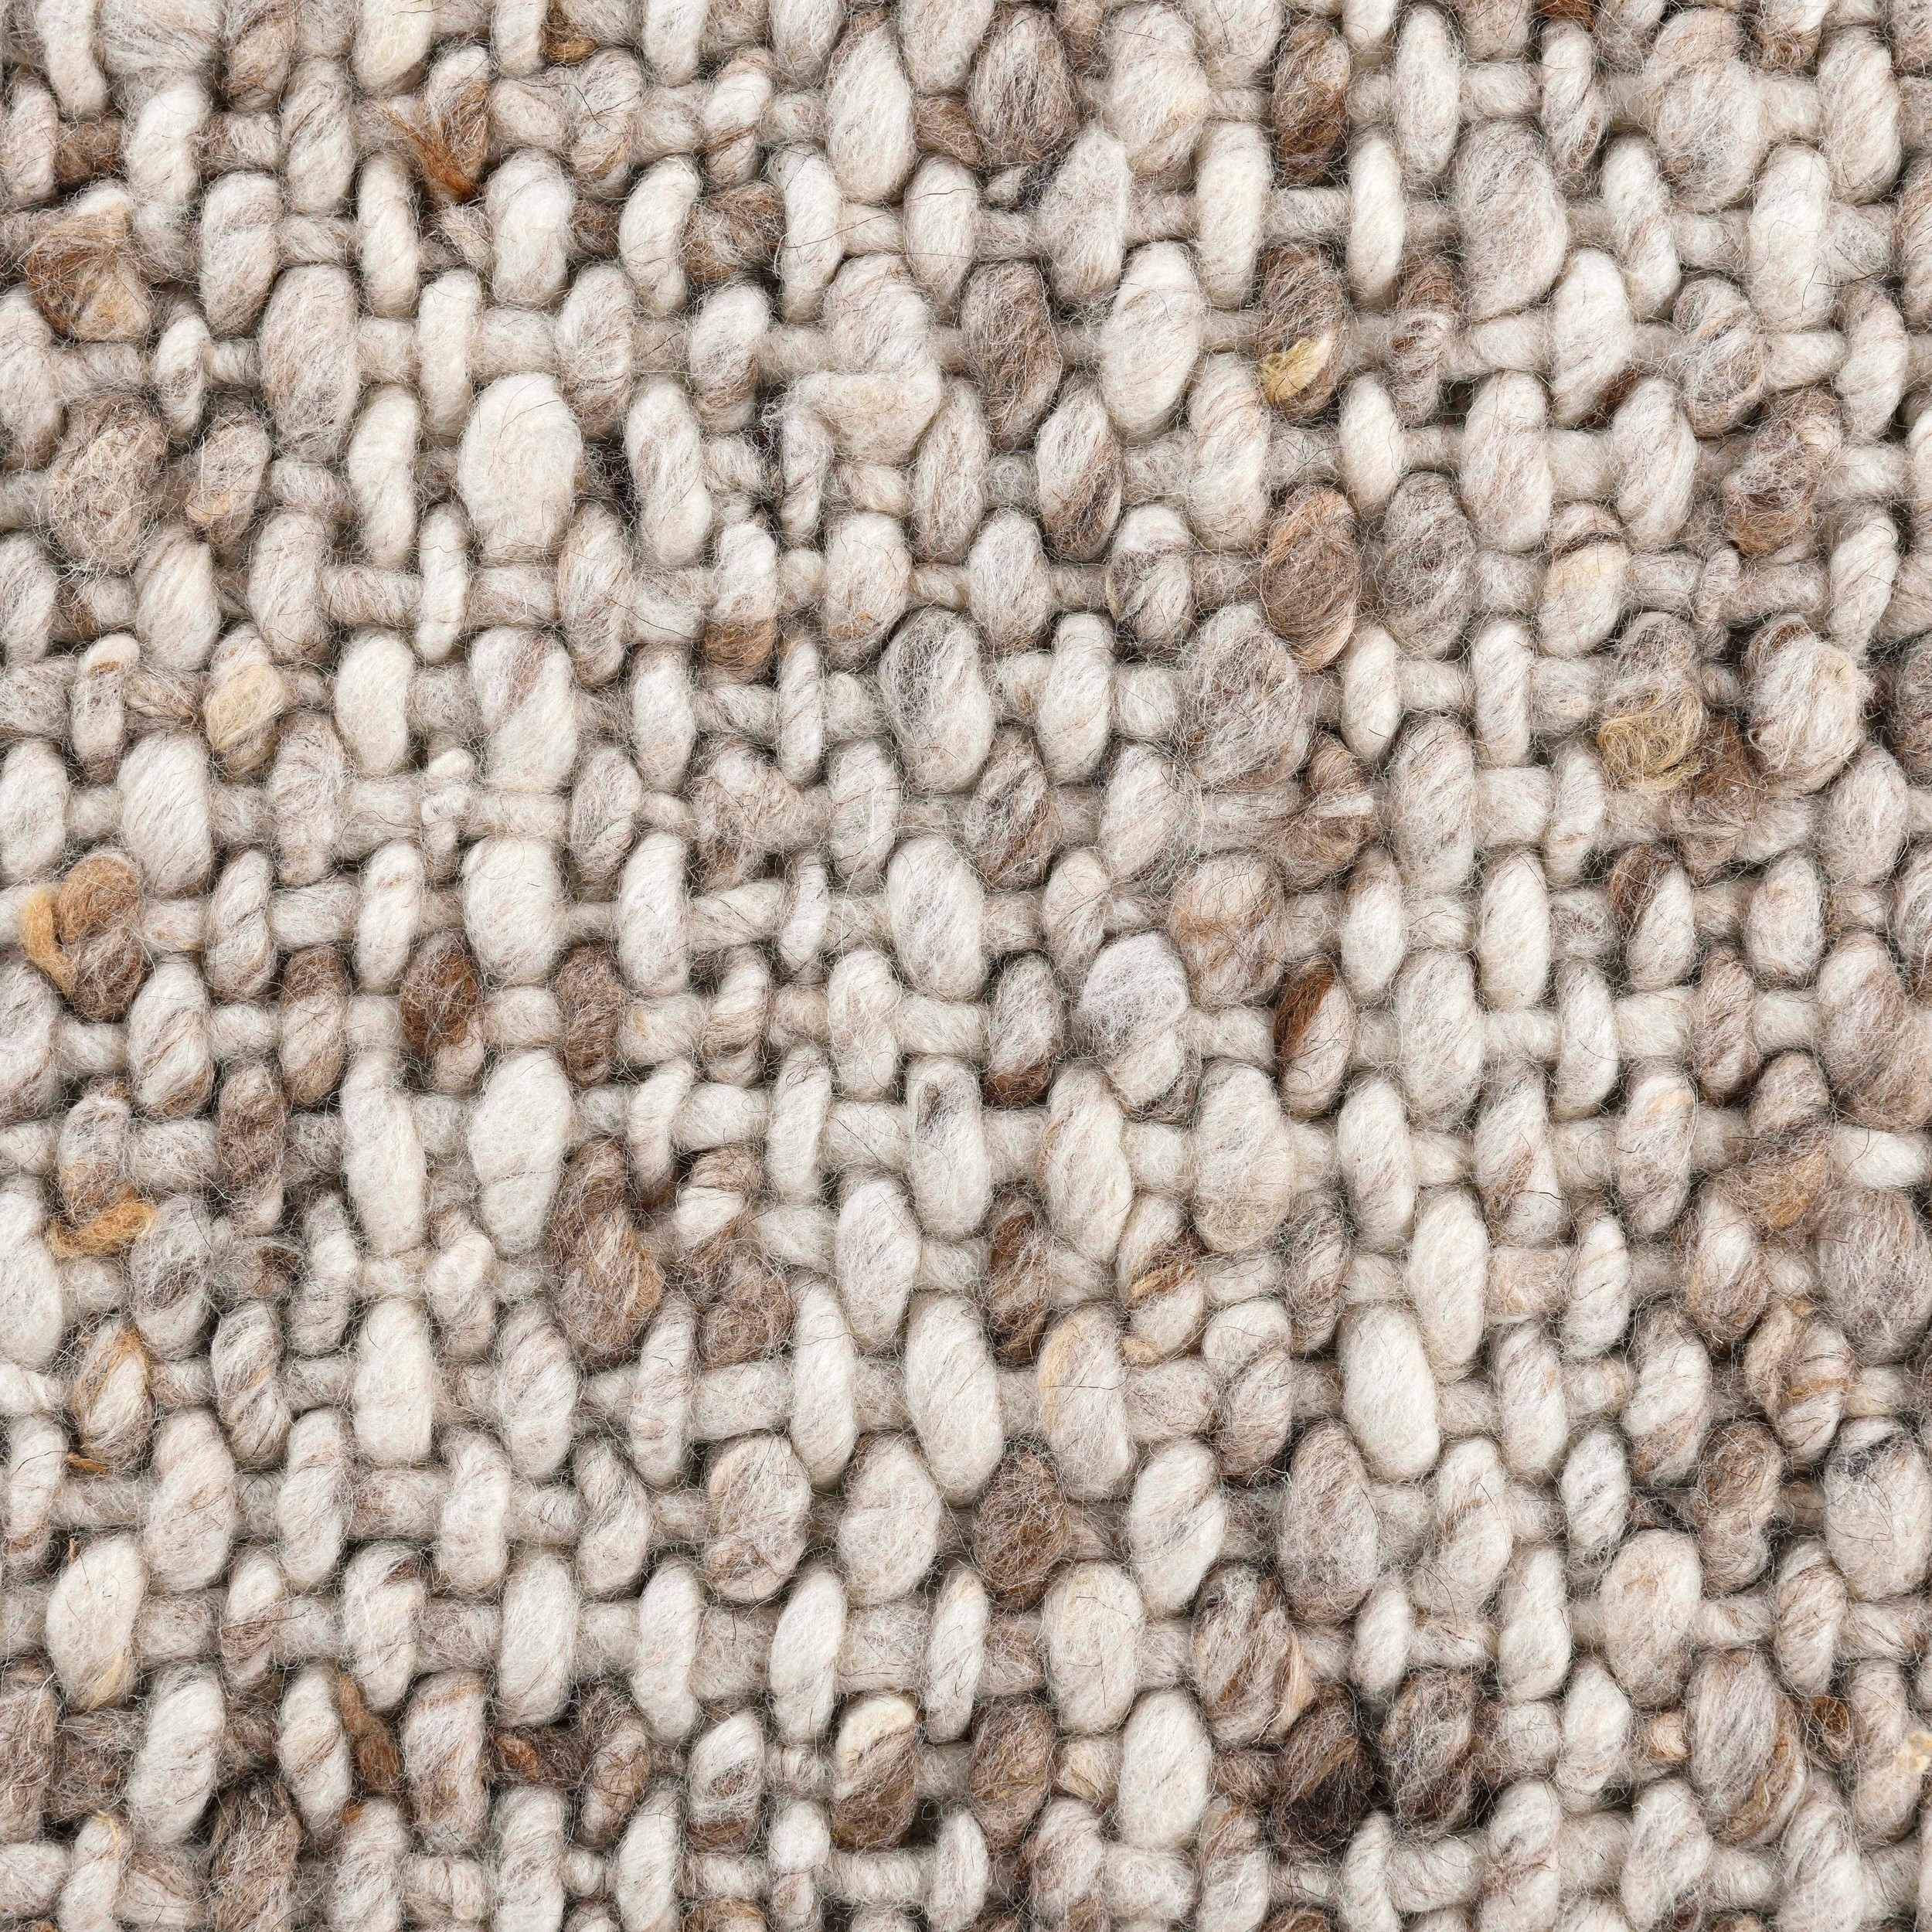 Kio 5 X 8 Medium Heather Area Rug, Handwoven New Zealand Wool, Beige, Ivory- Saltoro Sherpi